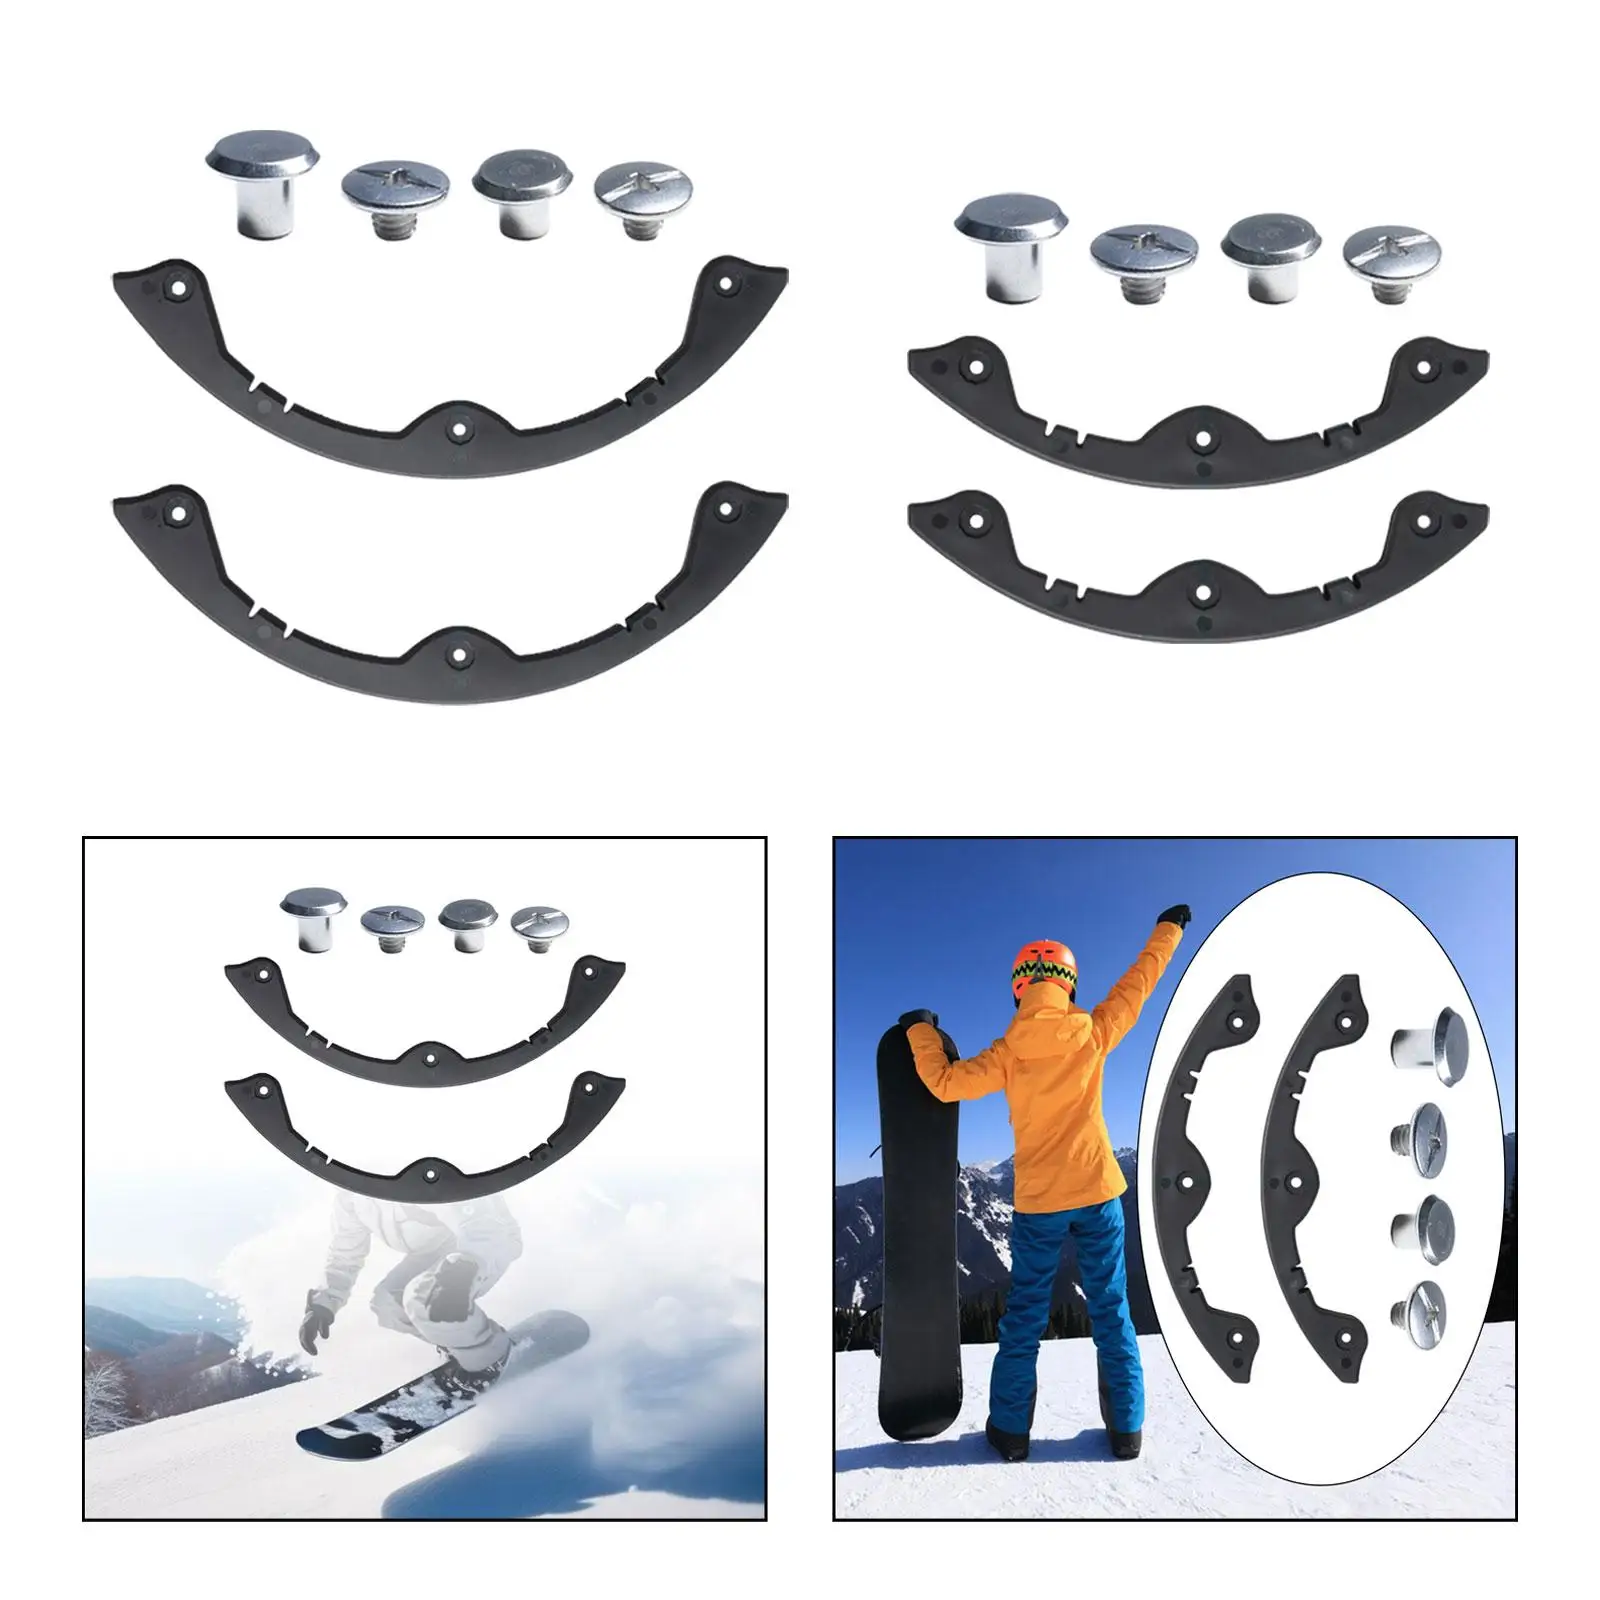 2x Snowboard Protection Strip, Longboard Deck Cover Strip, Skateboard Deck Guard Edge Cover, Black